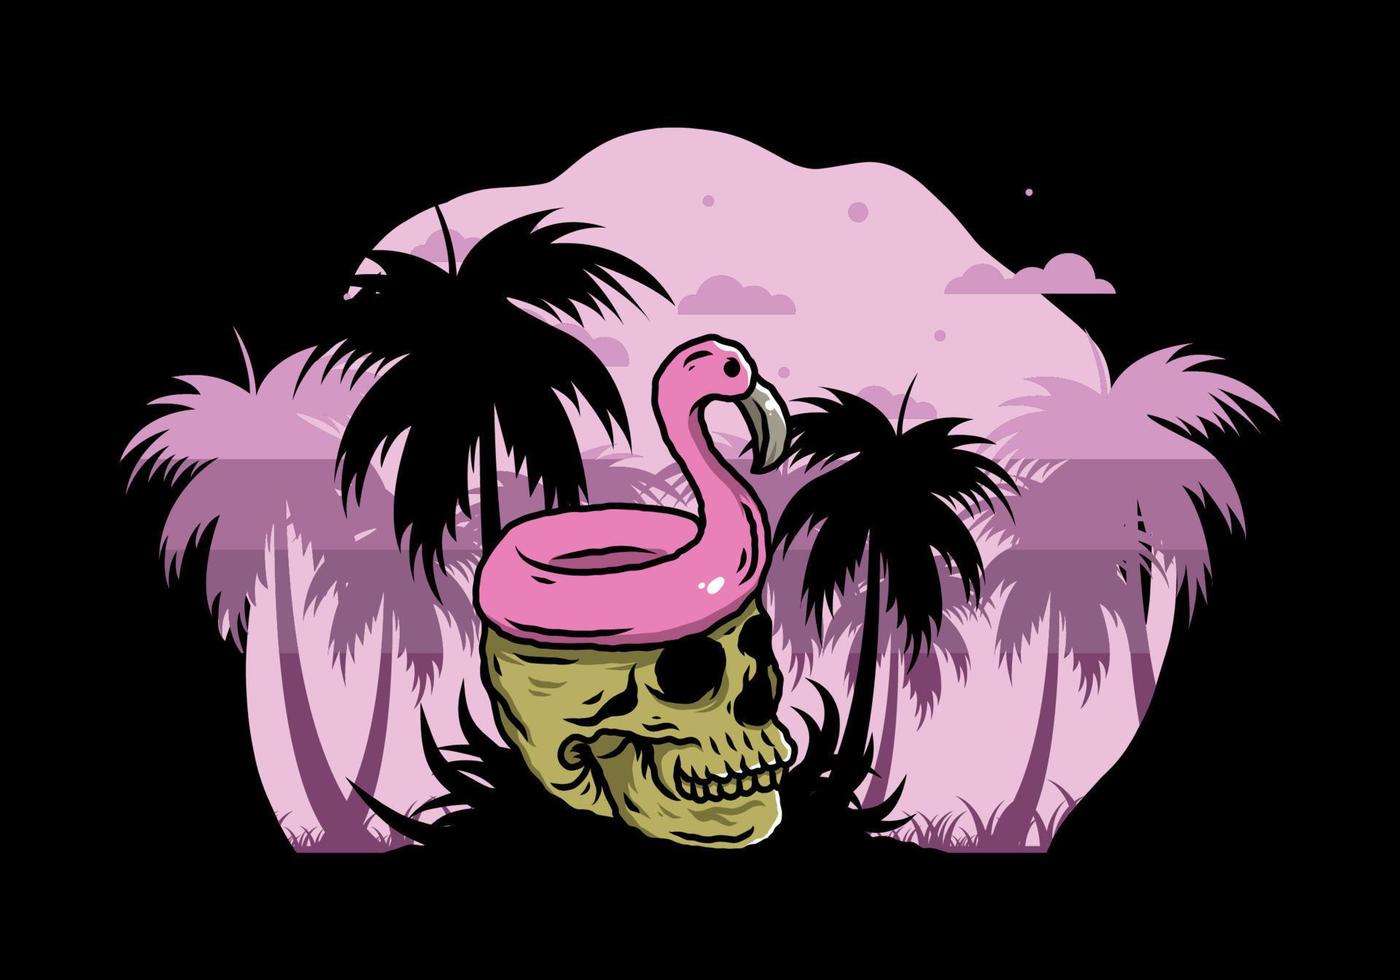 flamingo livboj är på toppen av skalle illustrationen vektor